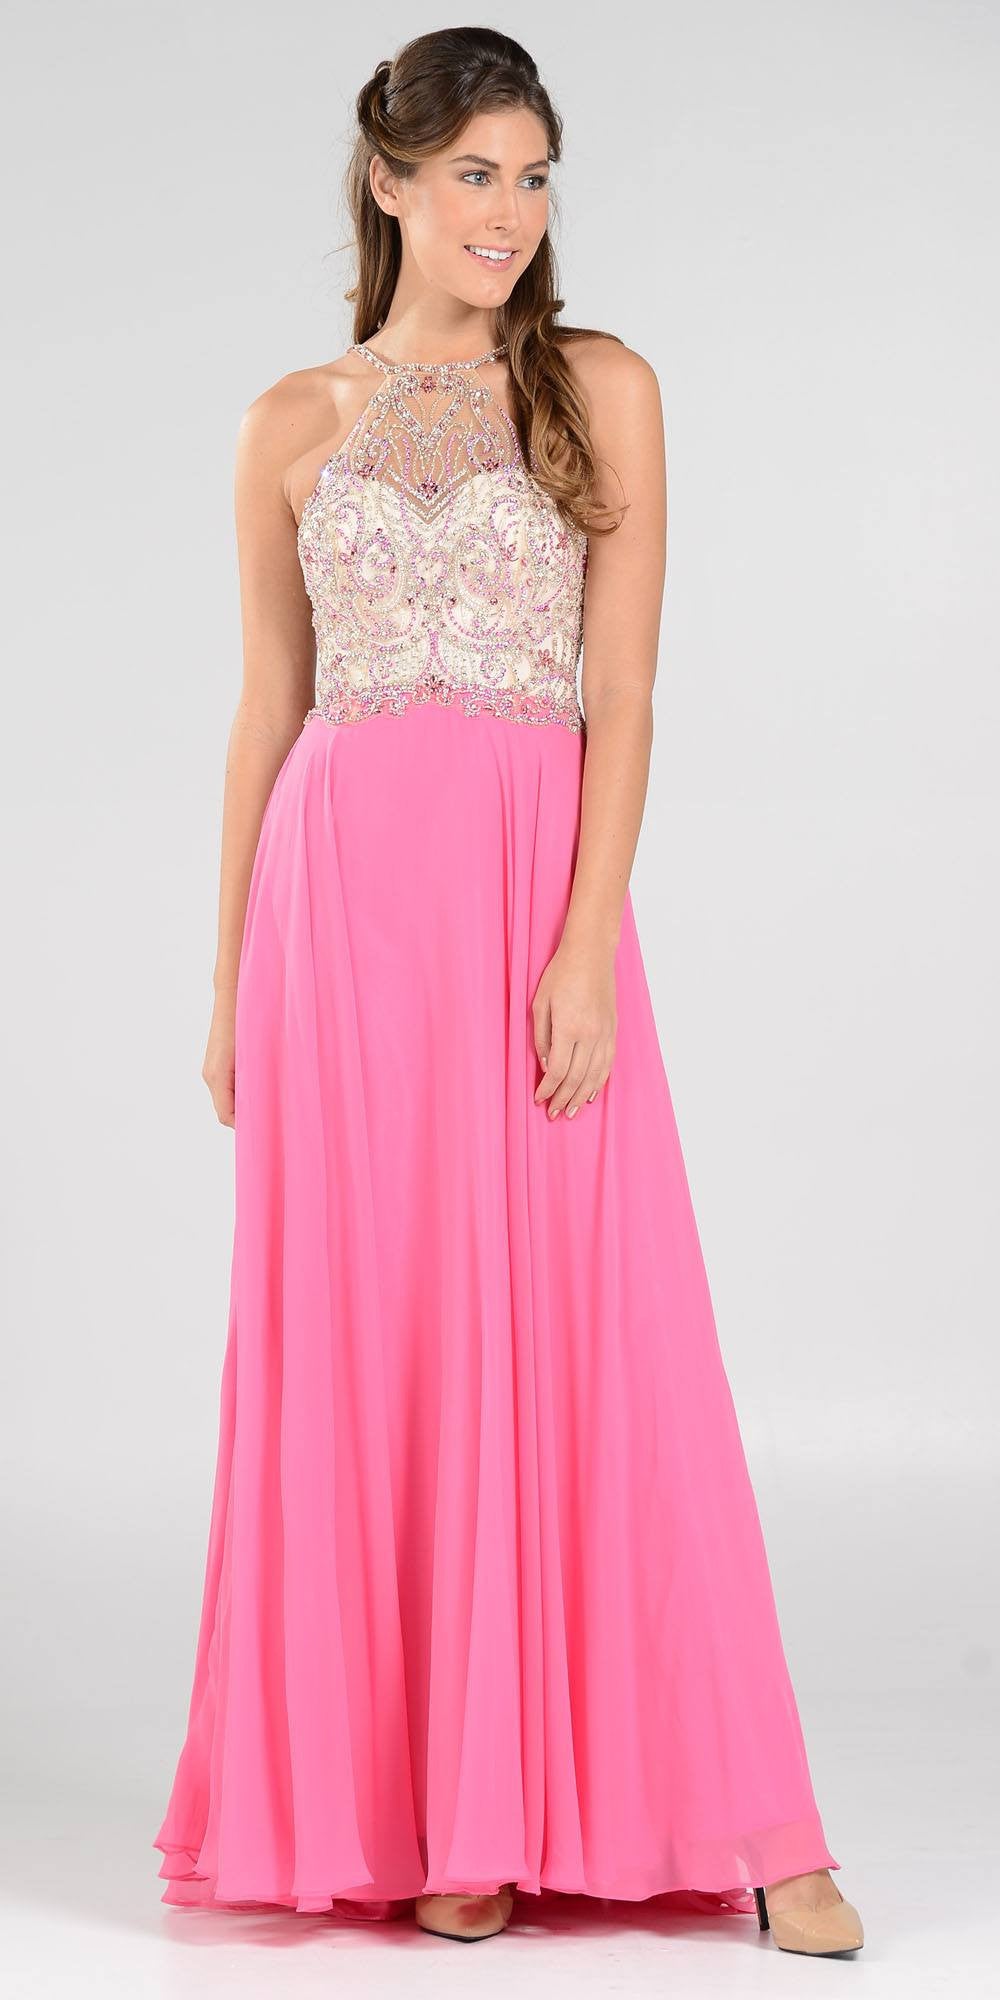 Poly USA 7826 - Halter Beaded Bodice A-Line Chiffon Long Prom Dress Hot Pink